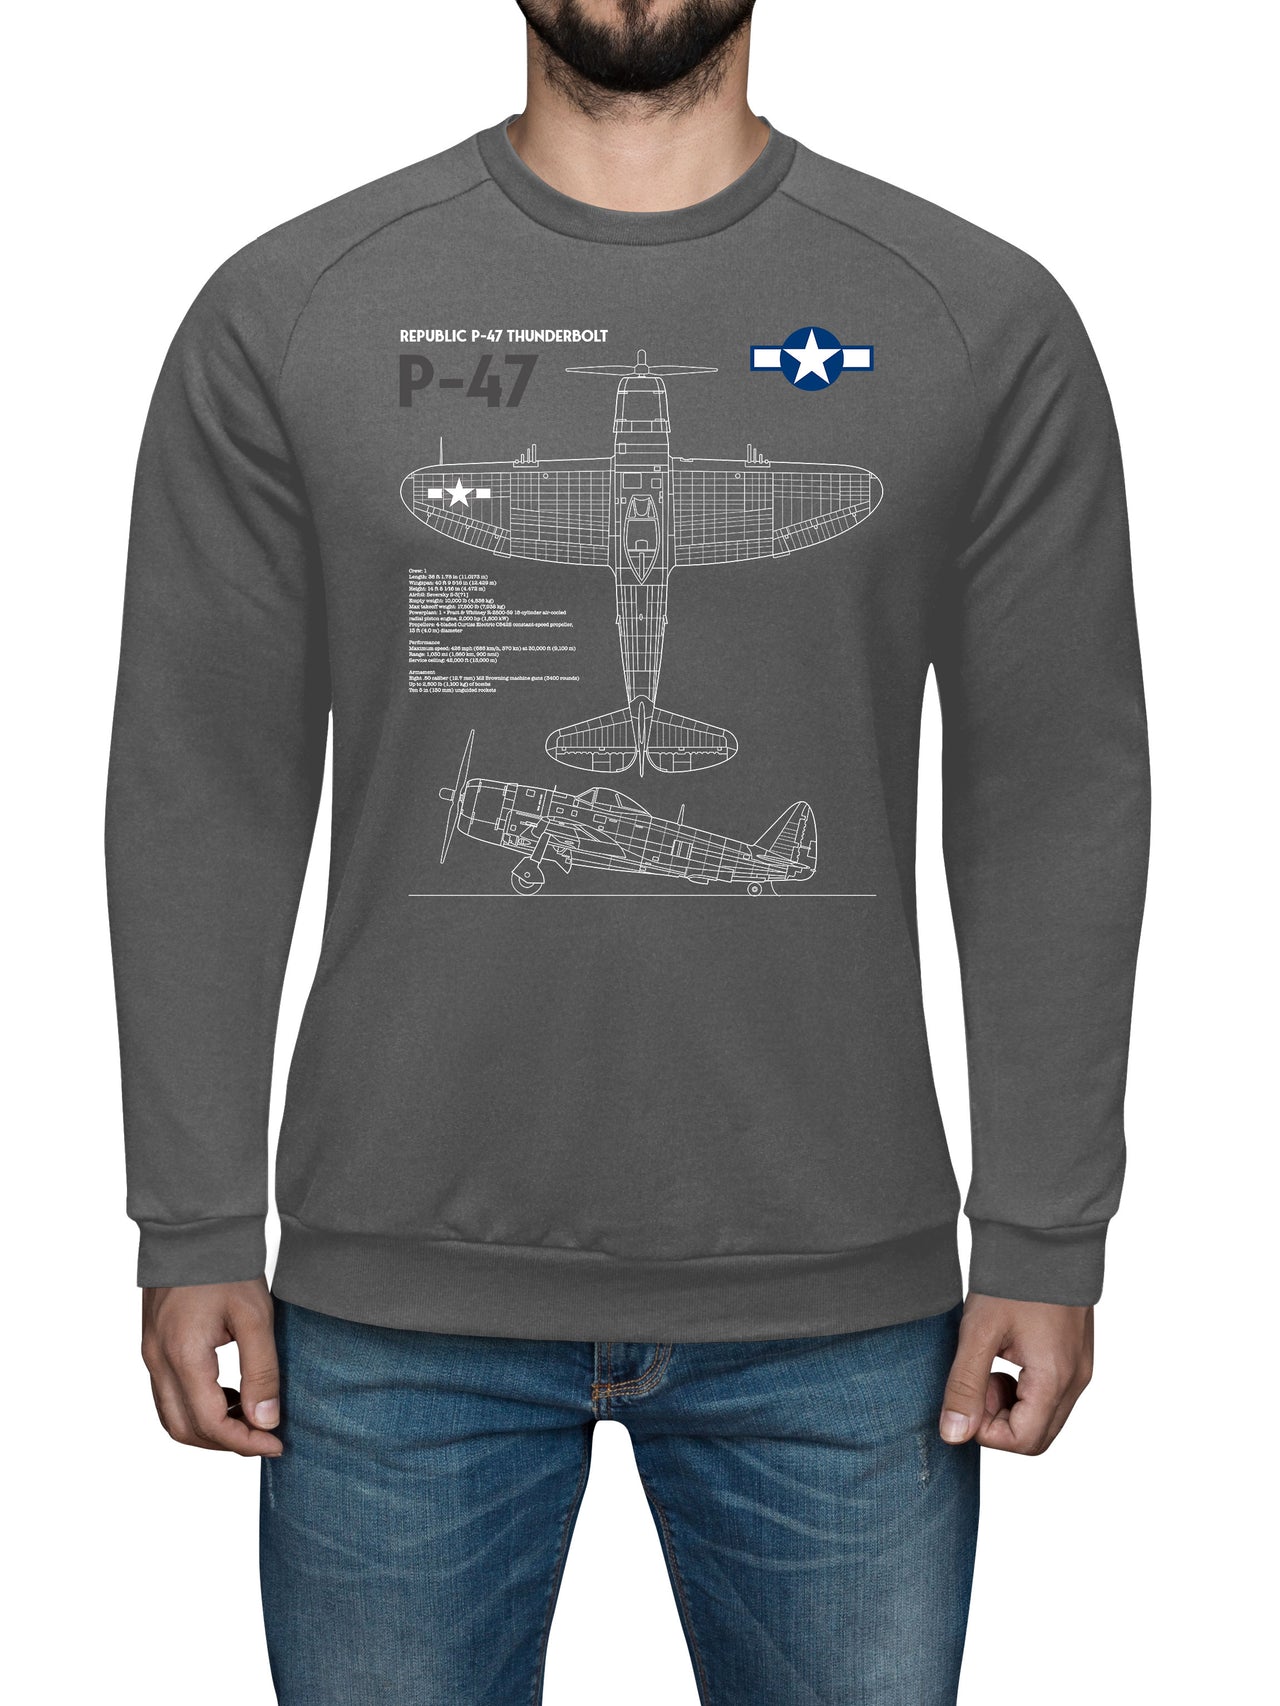 P-47 Thunderbolt - Sweat Shirt